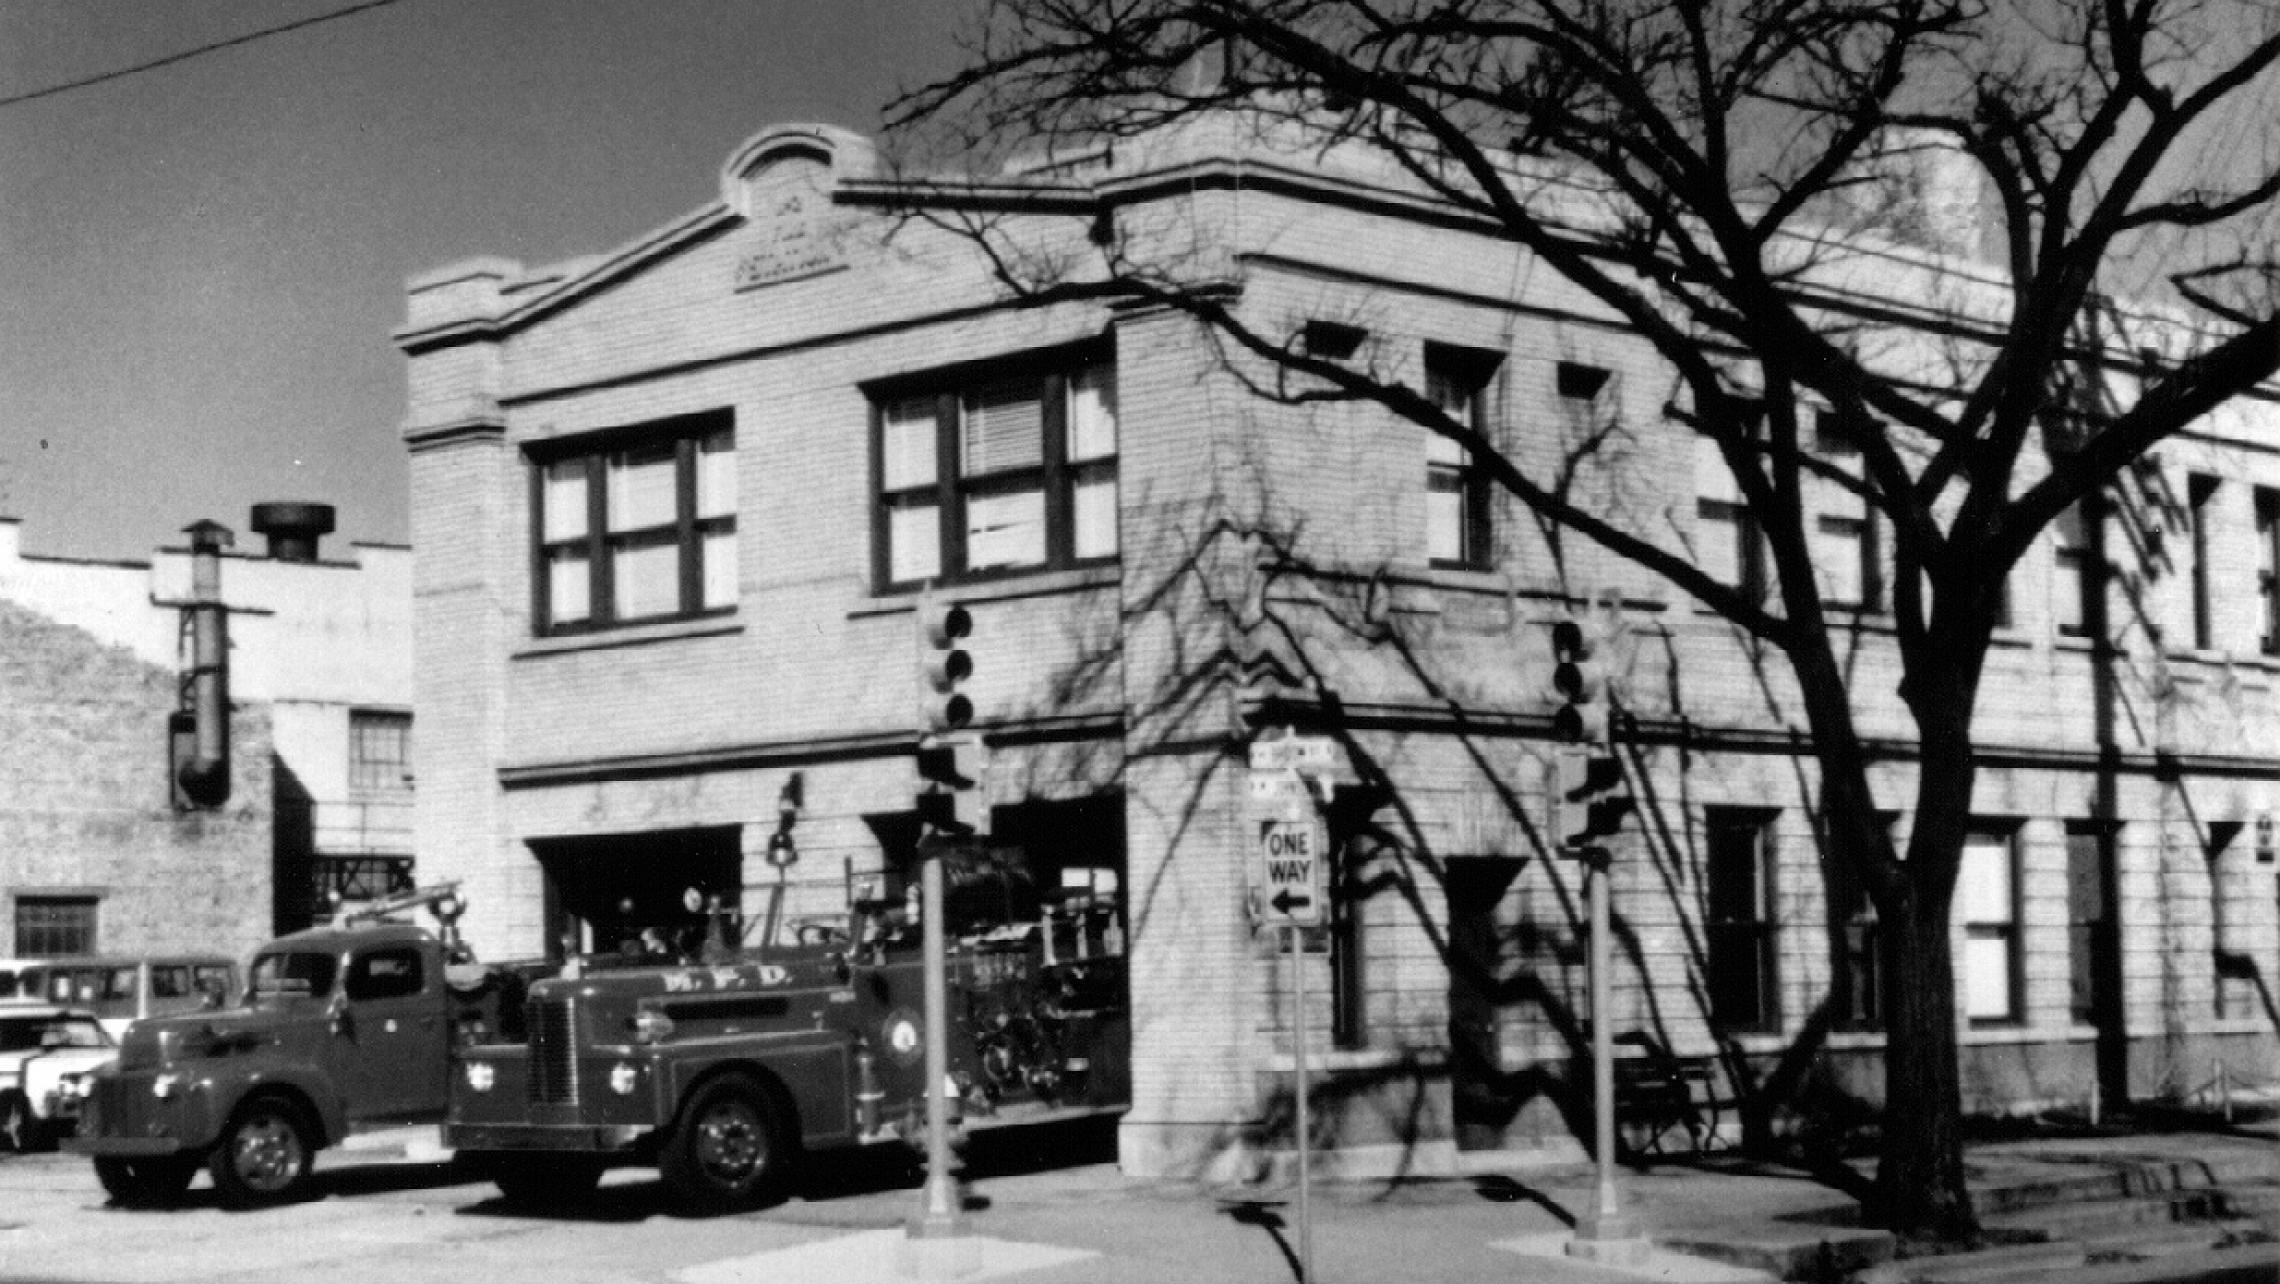 ULI Fire Station Number 2 Historic